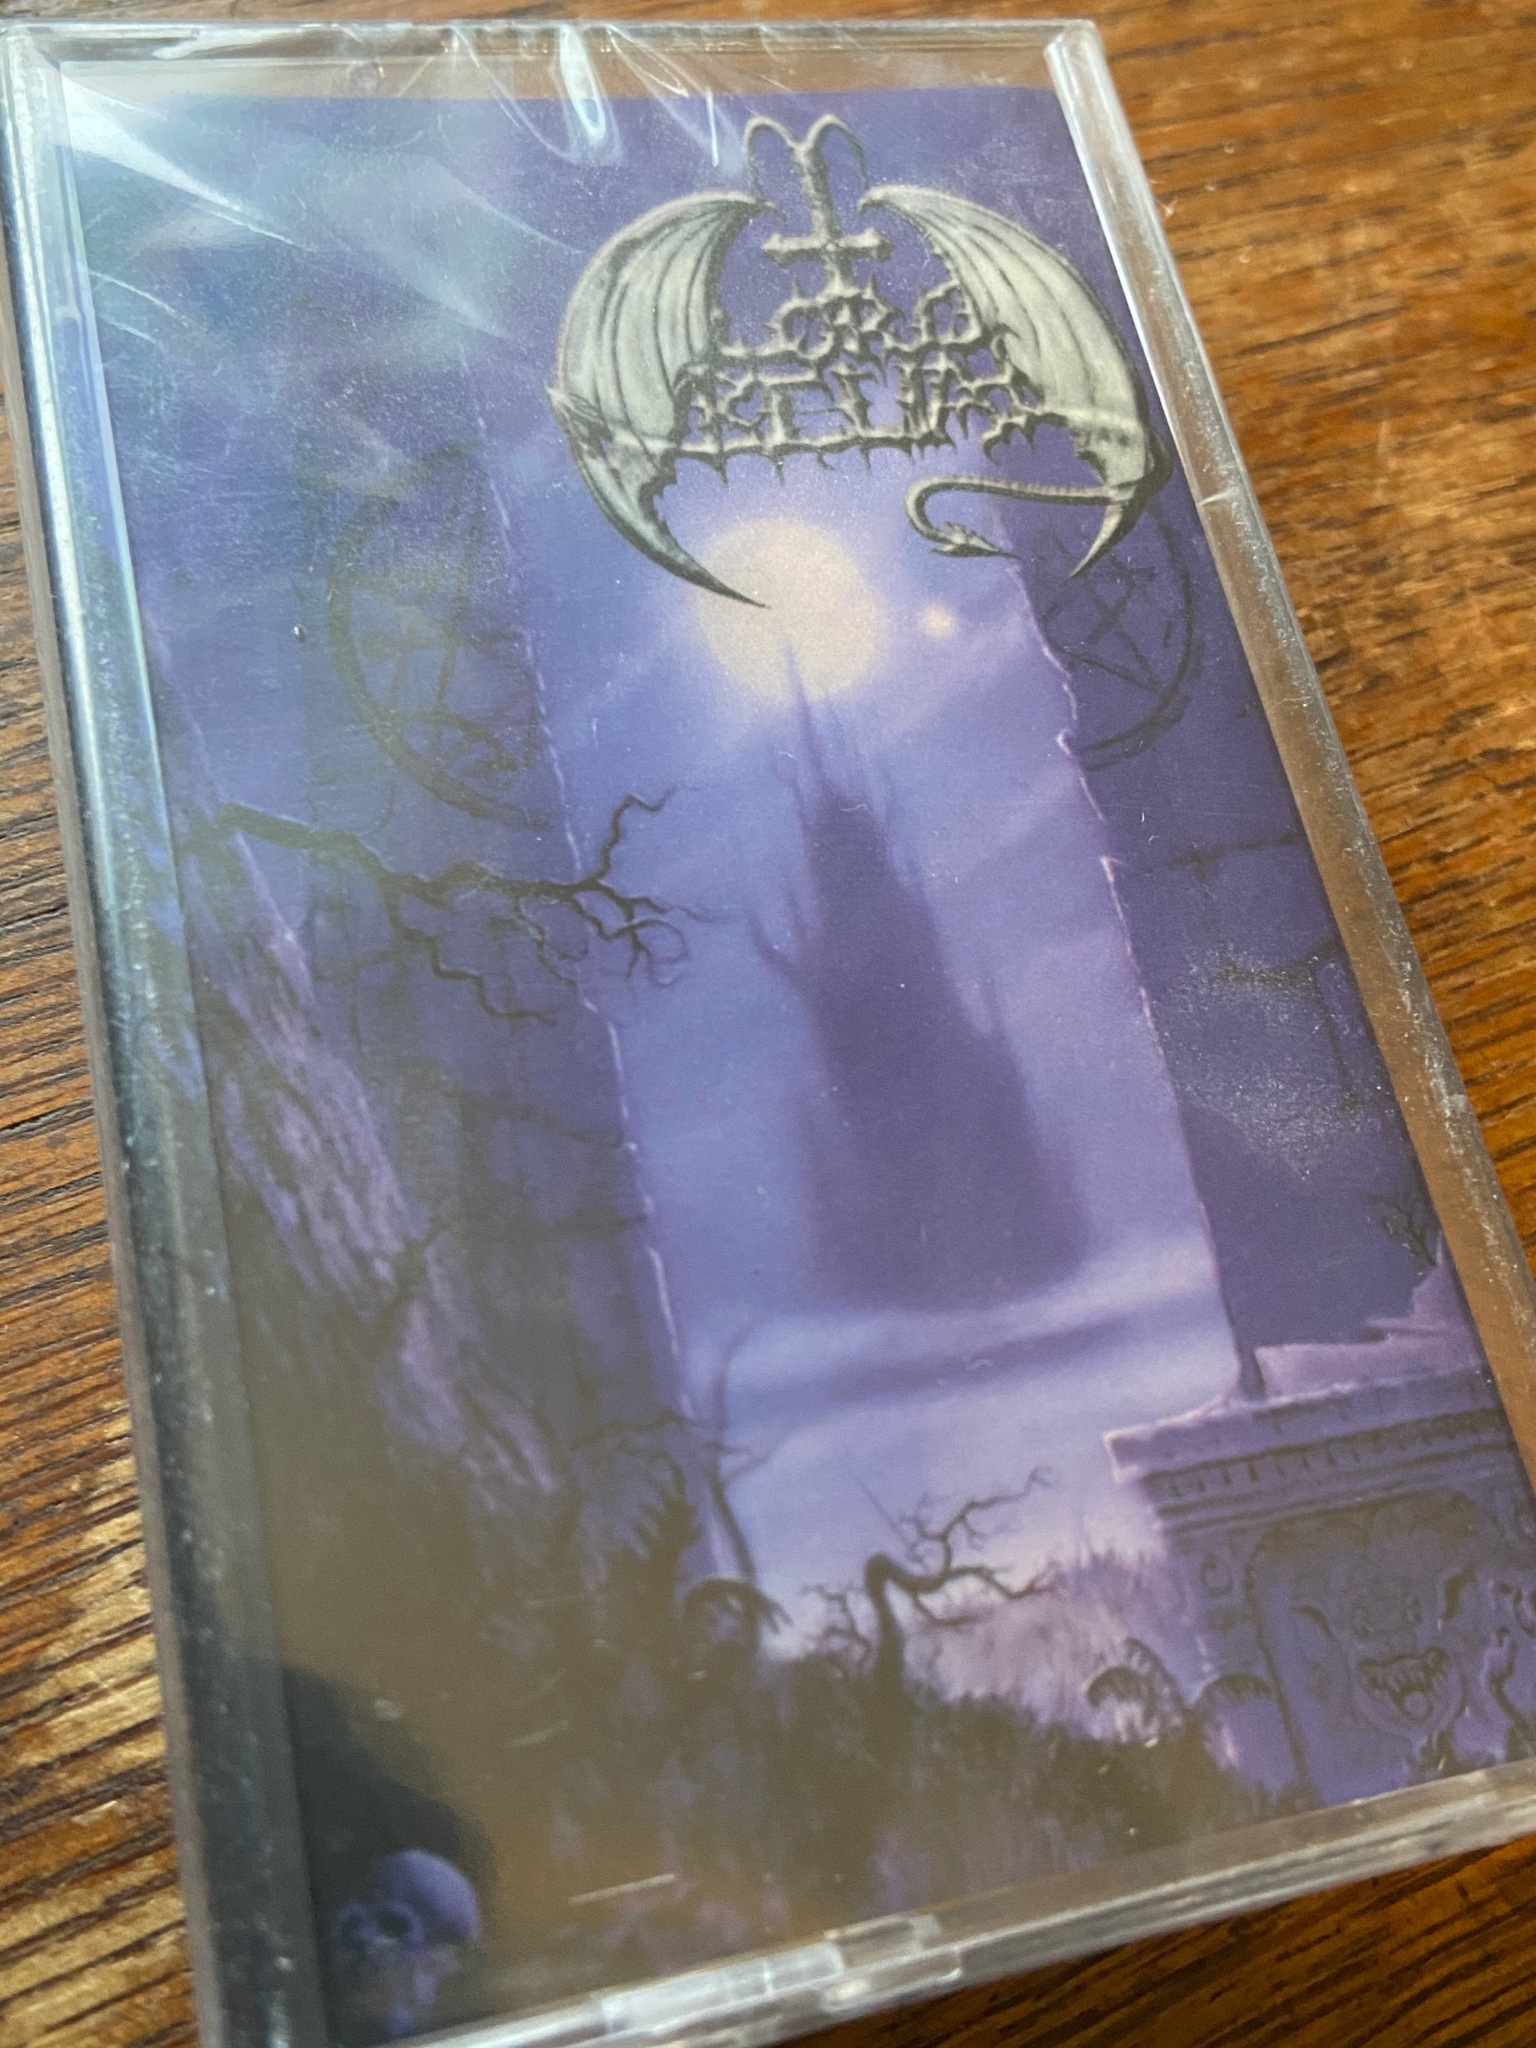 LORD BELIAL - Enter the moonlight gate - Cassette